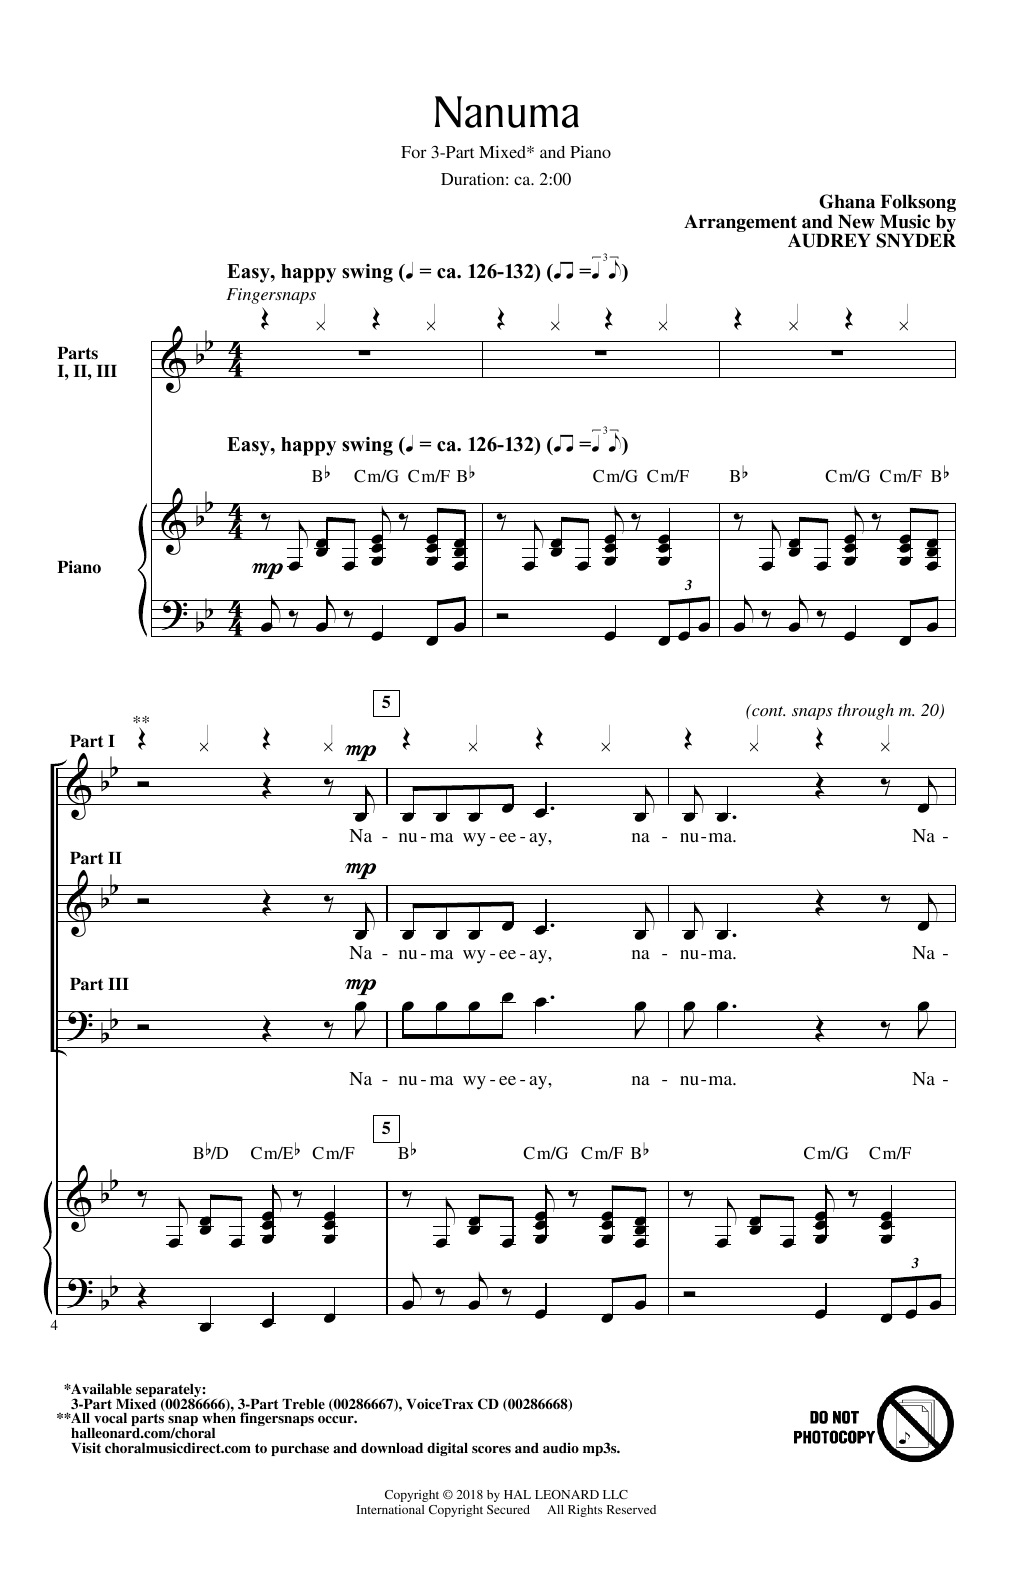 Audrey Snyder Nanuma Sheet Music Notes & Chords for Piano, Vocal & Guitar - Download or Print PDF